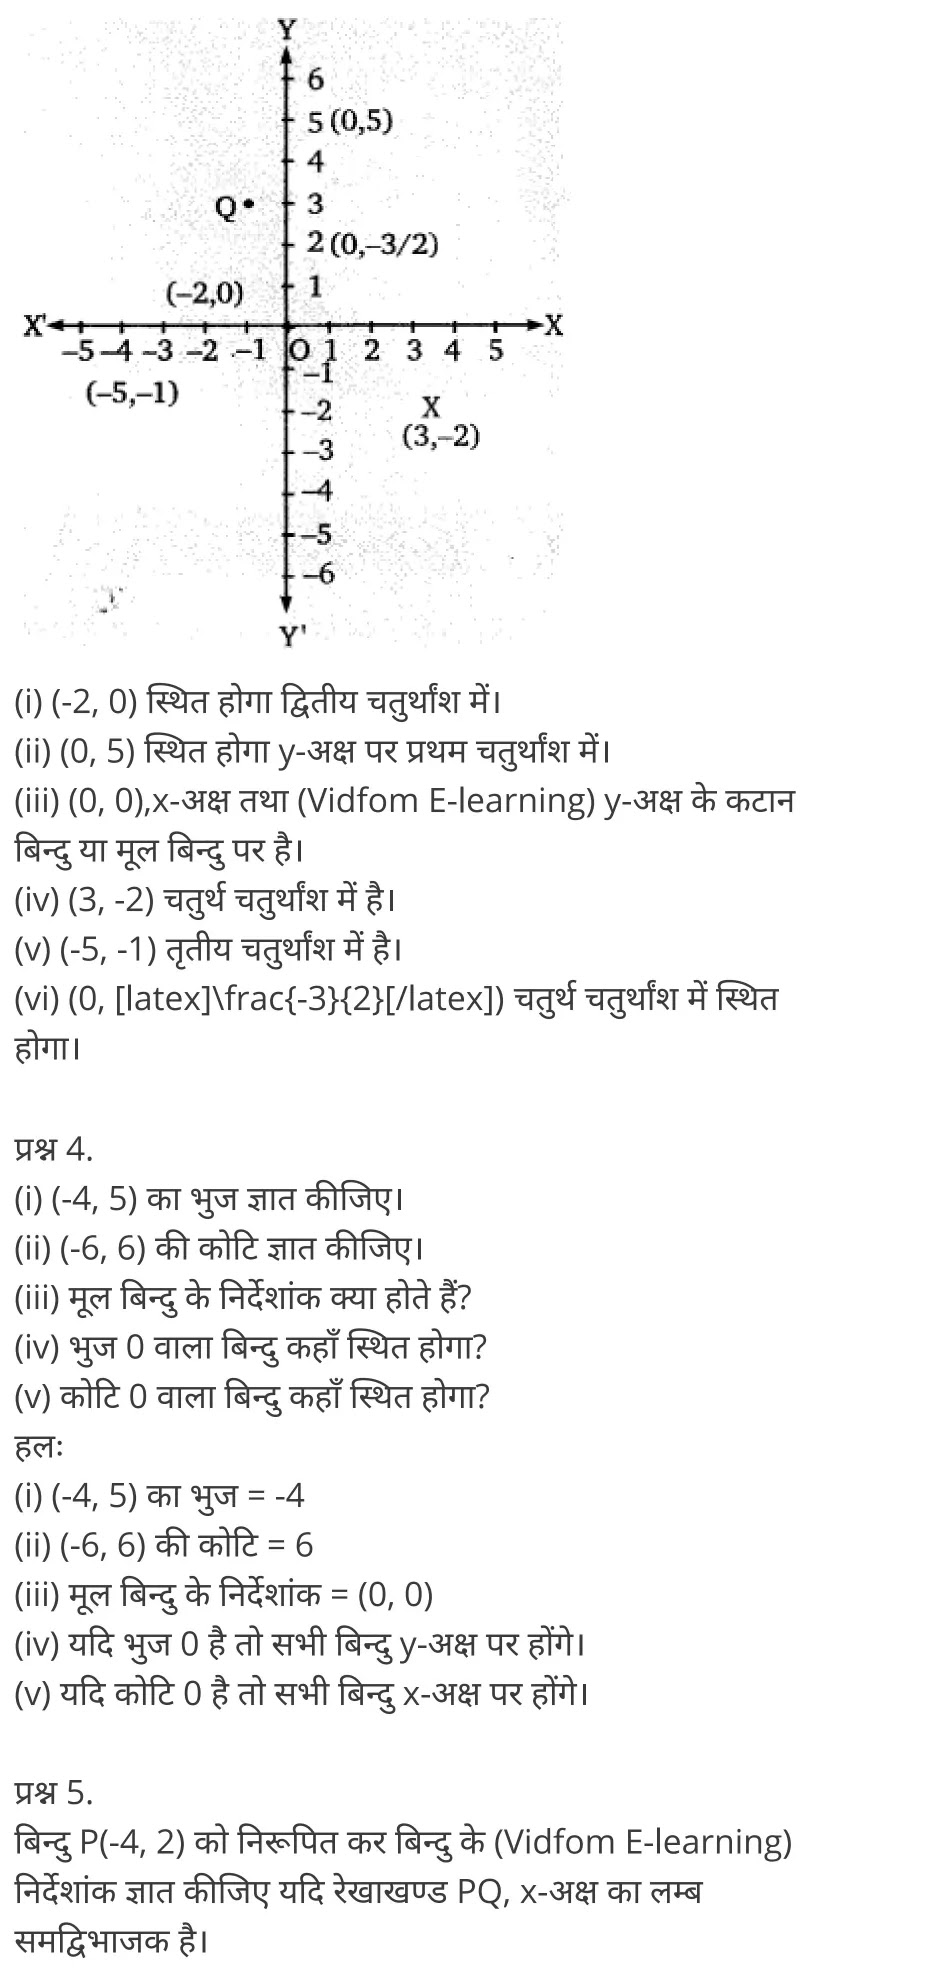 Chapter 6 Quadratic Equations Ex 6.1 Chapter 6 Quadratic Equations Ex 6.2 Chapter 6 Quadratic Equations Ex 6.3 Chapter 6 Quadratic Equations Ex 6.4 Chapter 6 Quadratic Equations Ex 6.5 कक्षा 10 बालाजी गणित  के नोट्स  हिंदी में एनसीईआरटी समाधान,     class 10 Balaji Maths Chapter 6,   class 10 Balaji Maths Chapter 6 ncert solutions in Hindi,   class 10 Balaji Maths Chapter 6 notes in hindi,   class 10 Balaji Maths Chapter 6 question answer,   class 10 Balaji Maths Chapter 6 notes,   class 10 Balaji Maths Chapter 6 class 10 Balaji Maths Chapter 6 in  hindi,    class 10 Balaji Maths Chapter 6 important questions in  hindi,   class 10 Balaji Maths Chapter 6 notes in hindi,    class 10 Balaji Maths Chapter 6 test,   class 10 Balaji Maths Chapter 6 pdf,   class 10 Balaji Maths Chapter 6 notes pdf,   class 10 Balaji Maths Chapter 6 exercise solutions,   class 10 Balaji Maths Chapter 6 notes study rankers,   class 10 Balaji Maths Chapter 6 notes,    class 10 Balaji Maths Chapter 6  class 10  notes pdf,   class 10 Balaji Maths Chapter 6 class 10  notes  ncert,   class 10 Balaji Maths Chapter 6 class 10 pdf,   class 10 Balaji Maths Chapter 6  book,   class 10 Balaji Maths Chapter 6 quiz class 10  ,    10  th class 10 Balaji Maths Chapter 6  book up board,   up board 10  th class 10 Balaji Maths Chapter 6 notes,  class 10 Balaji Maths,   class 10 Balaji Maths ncert solutions in Hindi,   class 10 Balaji Maths notes in hindi,   class 10 Balaji Maths question answer,   class 10 Balaji Maths notes,  class 10 Balaji Maths class 10 Balaji Maths Chapter 6 in  hindi,    class 10 Balaji Maths important questions in  hindi,   class 10 Balaji Maths notes in hindi,    class 10 Balaji Maths test,  class 10 Balaji Maths class 10 Balaji Maths Chapter 6 pdf,   class 10 Balaji Maths notes pdf,   class 10 Balaji Maths exercise solutions,   class 10 Balaji Maths,  class 10 Balaji Maths notes study rankers,   class 10 Balaji Maths notes,  class 10 Balaji Maths notes,   class 10 Balaji Maths  class 10  notes pdf,   class 10 Balaji Maths class 10  notes  ncert,   class 10 Balaji Maths class 10 pdf,   class 10 Balaji Maths  book,  class 10 Balaji Maths quiz class 10  ,  10  th class 10 Balaji Maths    book up board,    up board 10  th class 10 Balaji Maths notes,      कक्षा 10 बालाजी गणित अध्याय 6 ,  कक्षा 10 बालाजी गणित, कक्षा 10 बालाजी गणित अध्याय 6  के नोट्स हिंदी में,  कक्षा 10 का हिंदी अध्याय 6 का प्रश्न उत्तर,  कक्षा 10 बालाजी गणित अध्याय 6  के नोट्स,  10 कक्षा बालाजी गणित  हिंदी में, कक्षा 10 बालाजी गणित अध्याय 6  हिंदी में,  कक्षा 10 बालाजी गणित अध्याय 6  महत्वपूर्ण प्रश्न हिंदी में, कक्षा 10   हिंदी के नोट्स  हिंदी में, बालाजी गणित हिंदी में  कक्षा 10 नोट्स pdf,    बालाजी गणित हिंदी में  कक्षा 10 नोट्स 2021 ncert,   बालाजी गणित हिंदी  कक्षा 10 pdf,   बालाजी गणित हिंदी में  पुस्तक,   बालाजी गणित हिंदी में की बुक,   बालाजी गणित हिंदी में  प्रश्नोत्तरी class 10 ,  बिहार बोर्ड 10  पुस्तक वीं हिंदी नोट्स,    बालाजी गणित कक्षा 10 नोट्स 2021 ncert,   बालाजी गणित  कक्षा 10 pdf,   बालाजी गणित  पुस्तक,   बालाजी गणित  प्रश्नोत्तरी class 10, कक्षा 10 बालाजी गणित,  कक्षा 10 बालाजी गणित  के नोट्स हिंदी में,  कक्षा 10 का हिंदी का प्रश्न उत्तर,  कक्षा 10 बालाजी गणित  के नोट्स,  10 कक्षा हिंदी 2021  हिंदी में, कक्षा 10 बालाजी गणित  हिंदी में,  कक्षा 10 बालाजी गणित  महत्वपूर्ण प्रश्न हिंदी में, कक्षा 10 बालाजी गणित  नोट्स  हिंदी में,